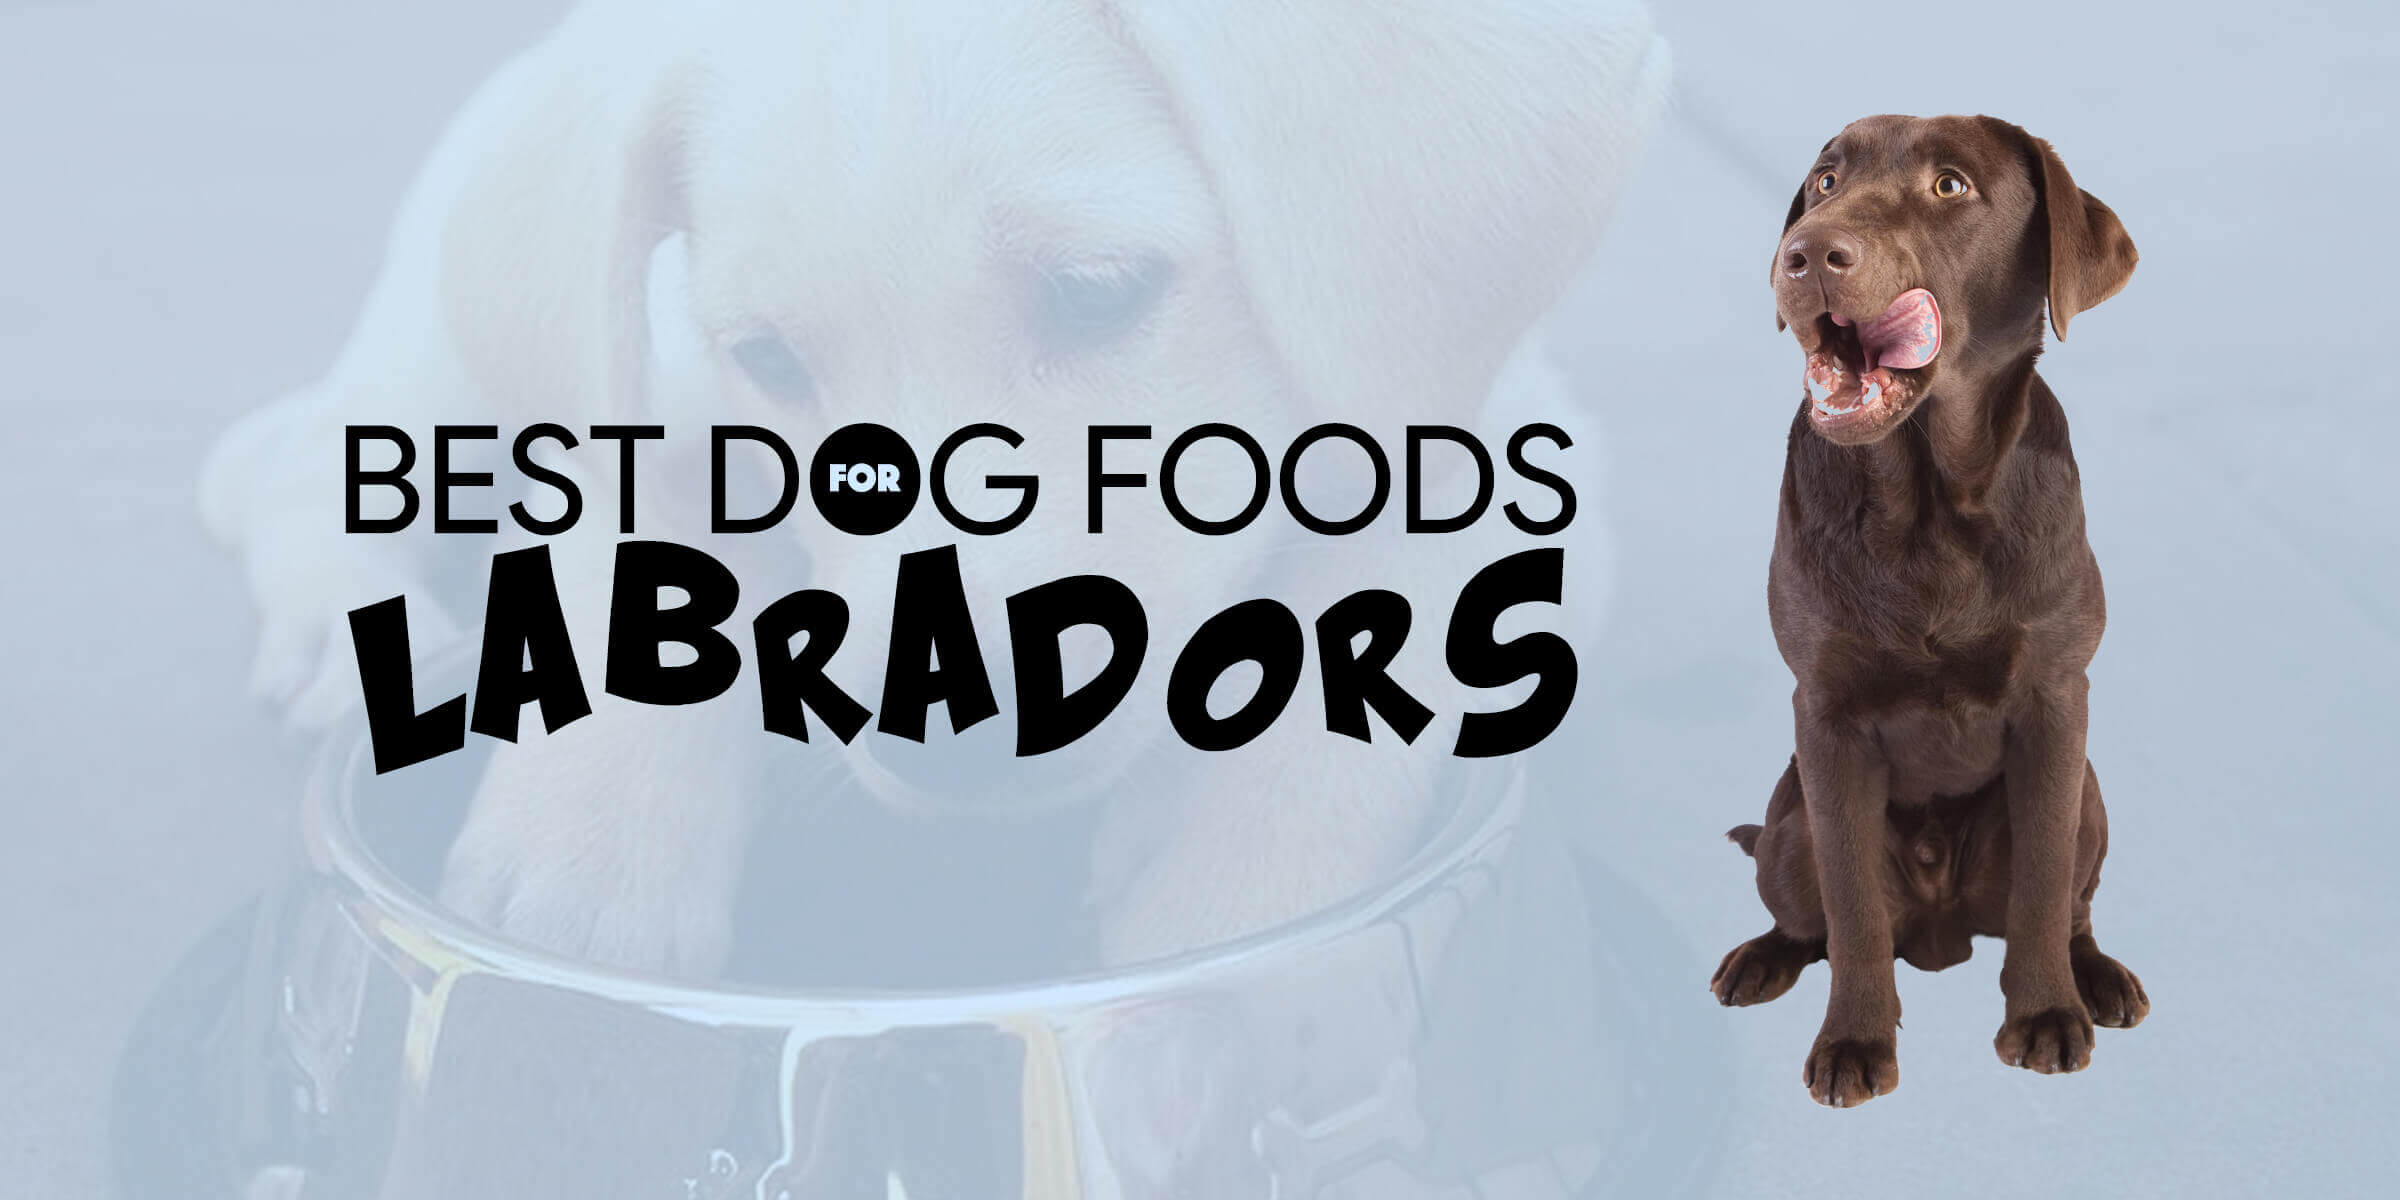 Best Dog Foods For Labradors